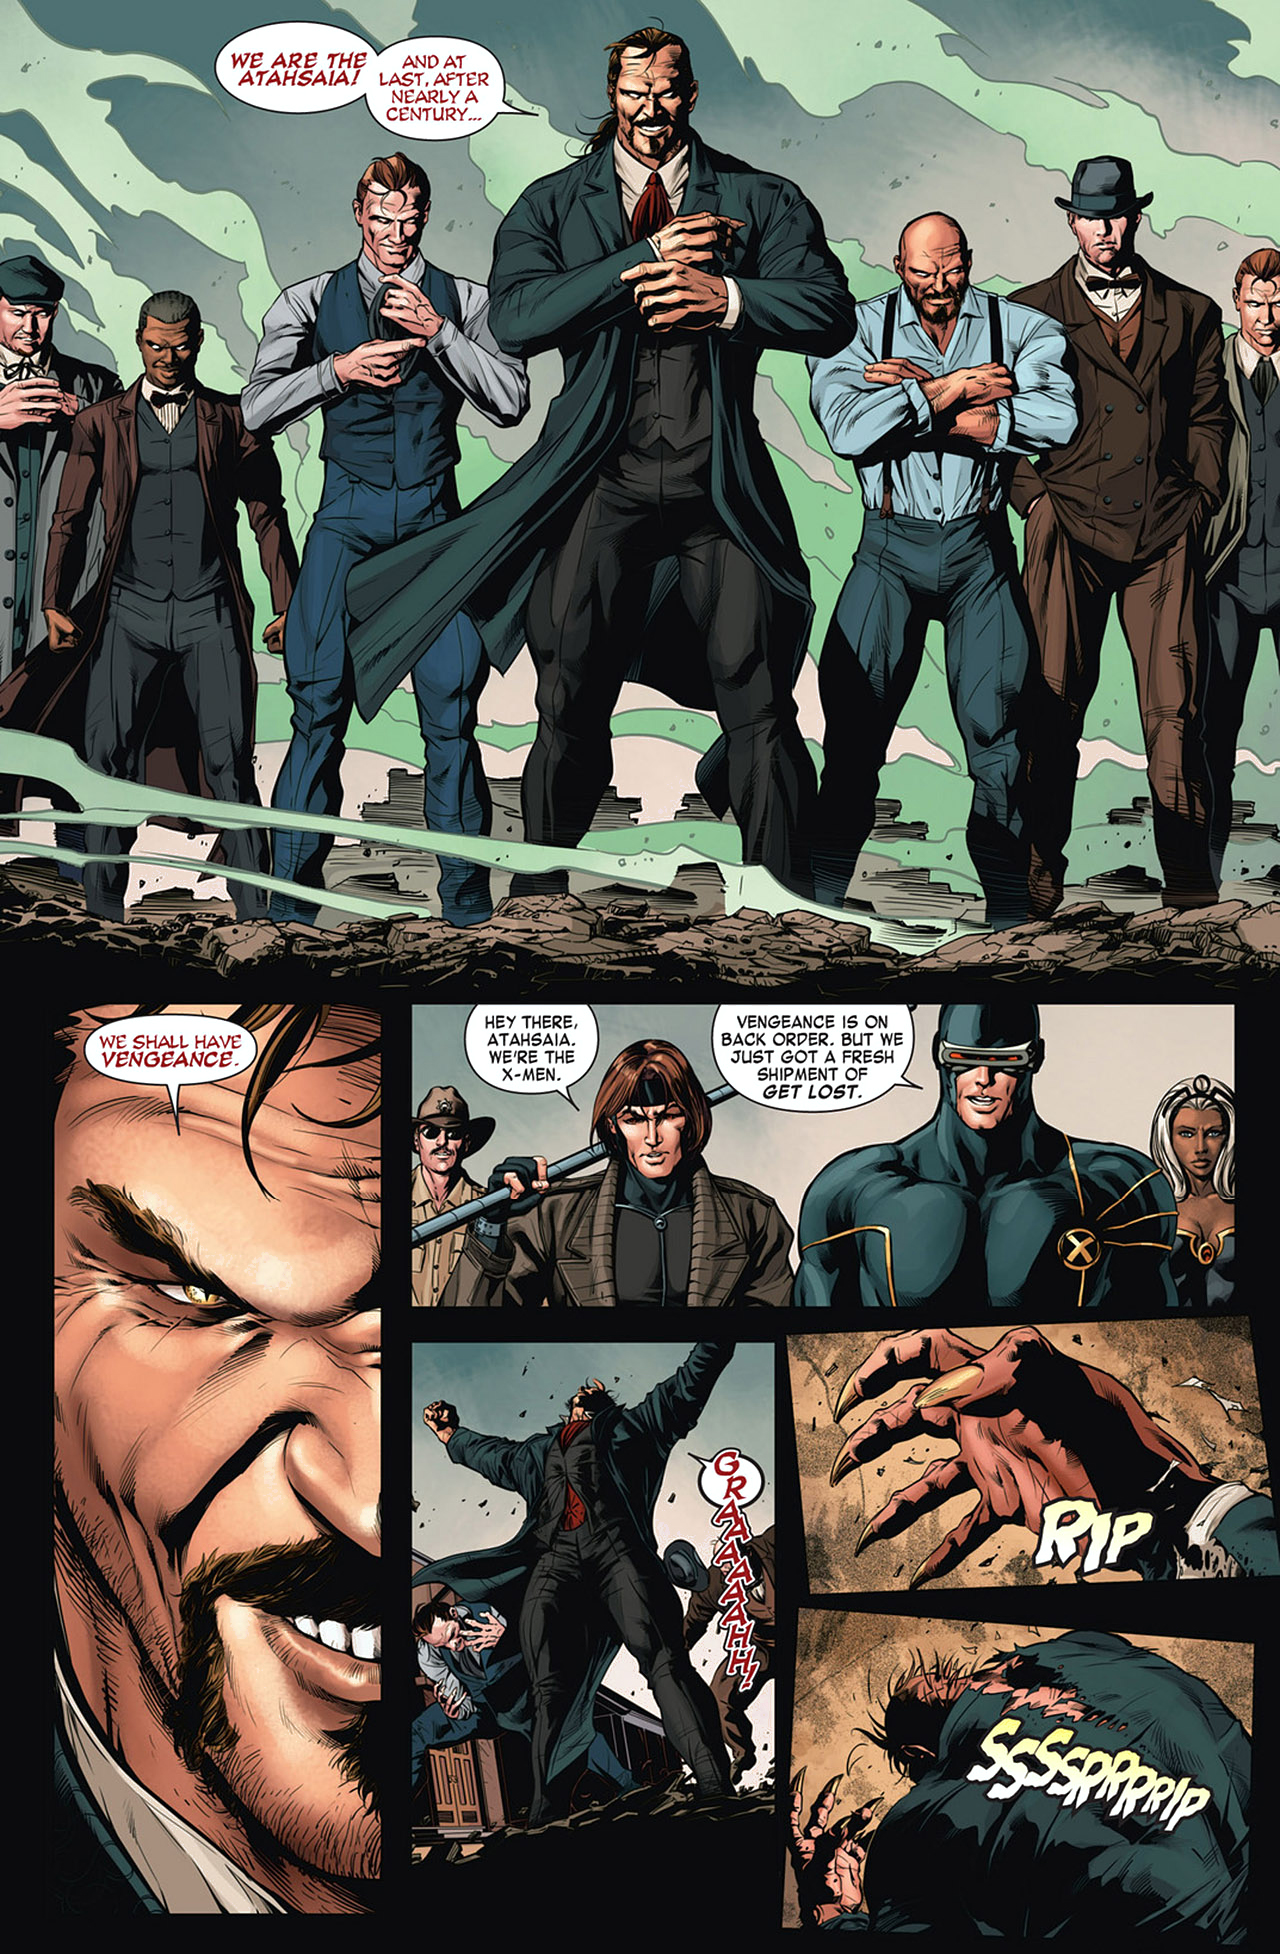 The X-Men And Ghostrider VS The Atahsaia 